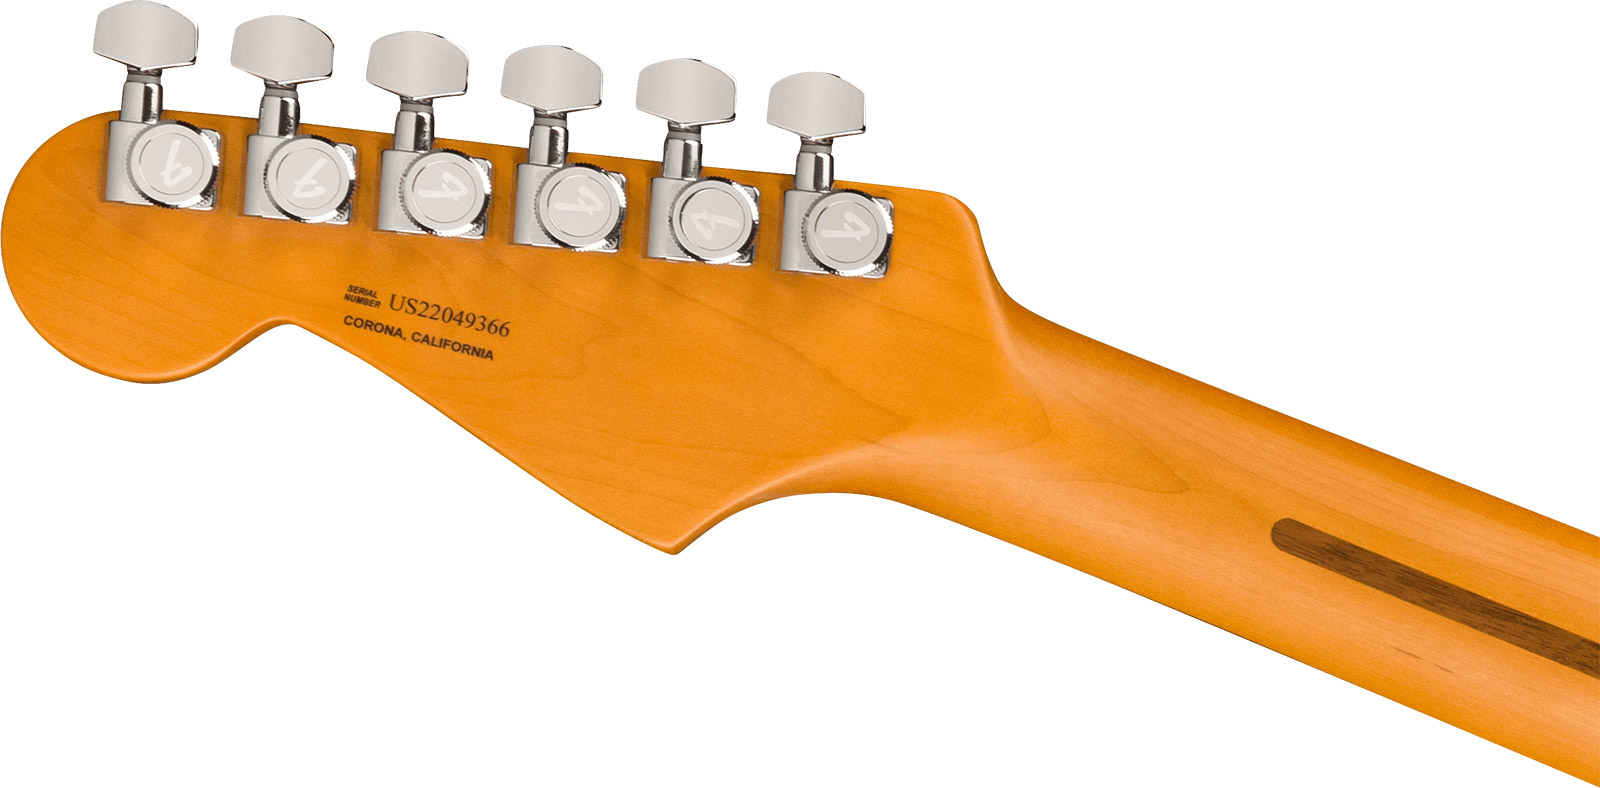 Fender Strat American Ultra Ltd Usa 3s Trem Eb - Bubble Gum Metallic - Str shape electric guitar - Variation 3